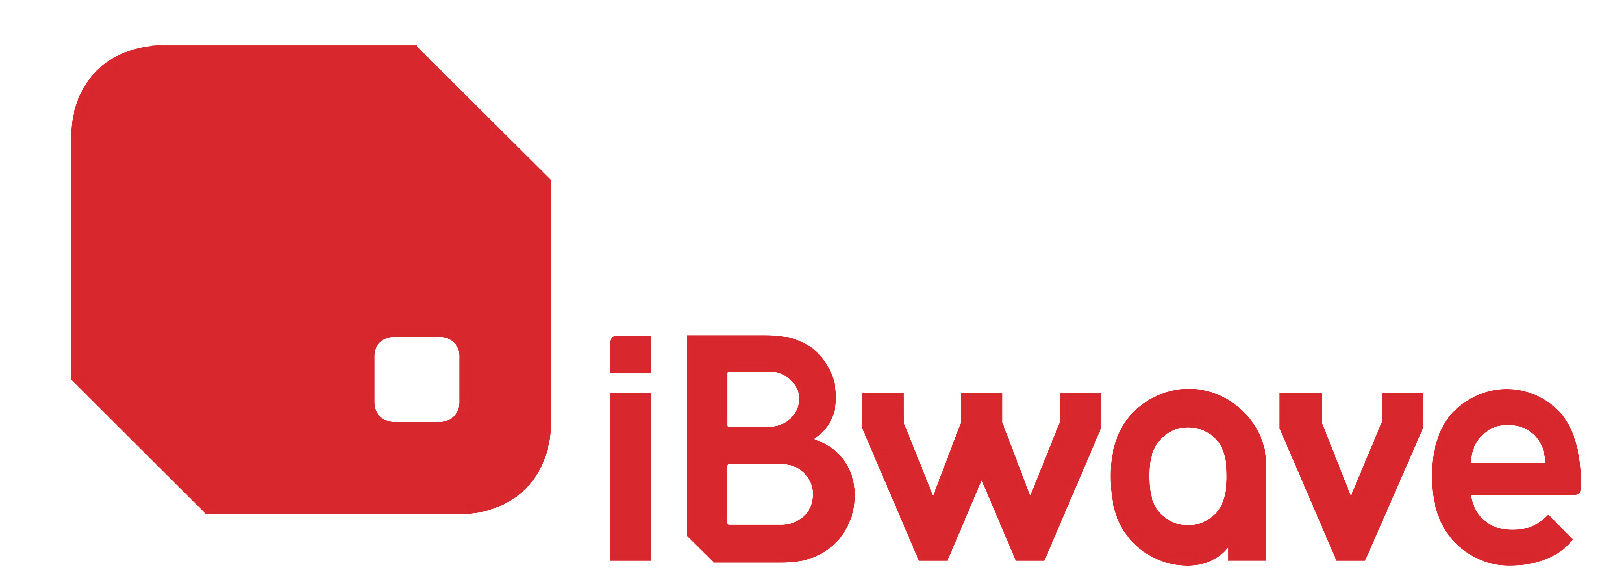 IBWAVE Logo